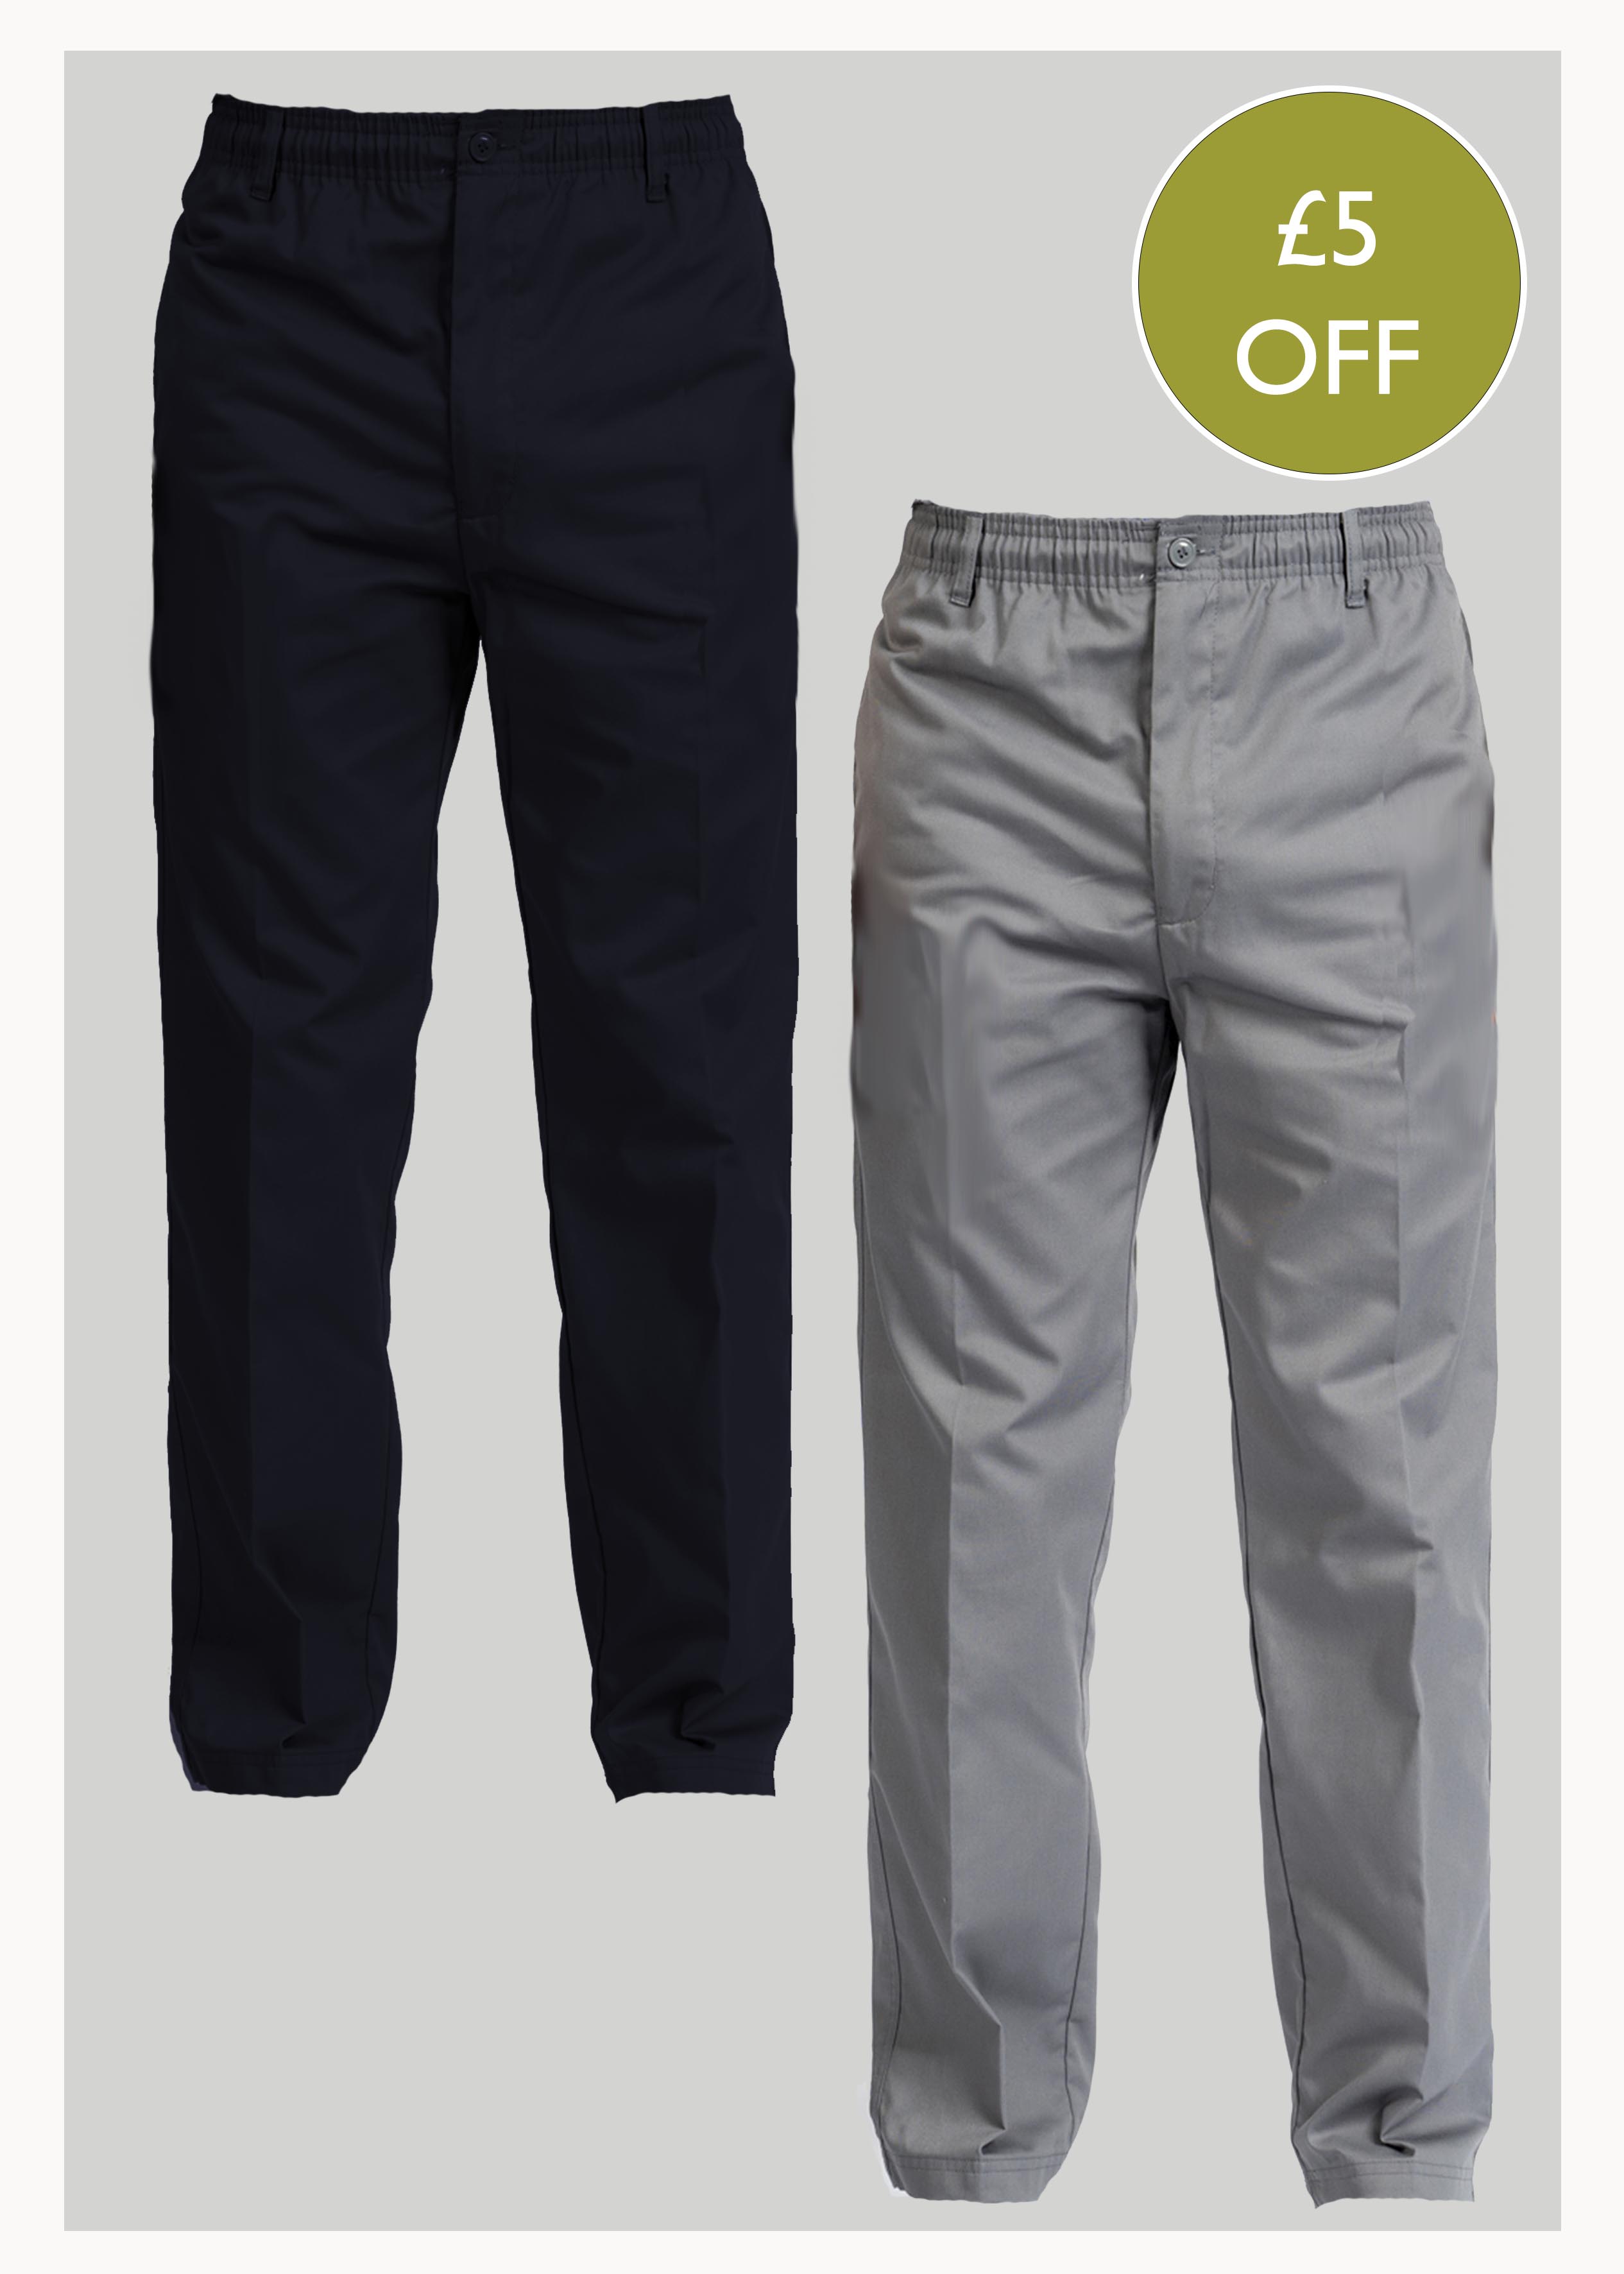 Trousers - Trouser - Damart.co.uk